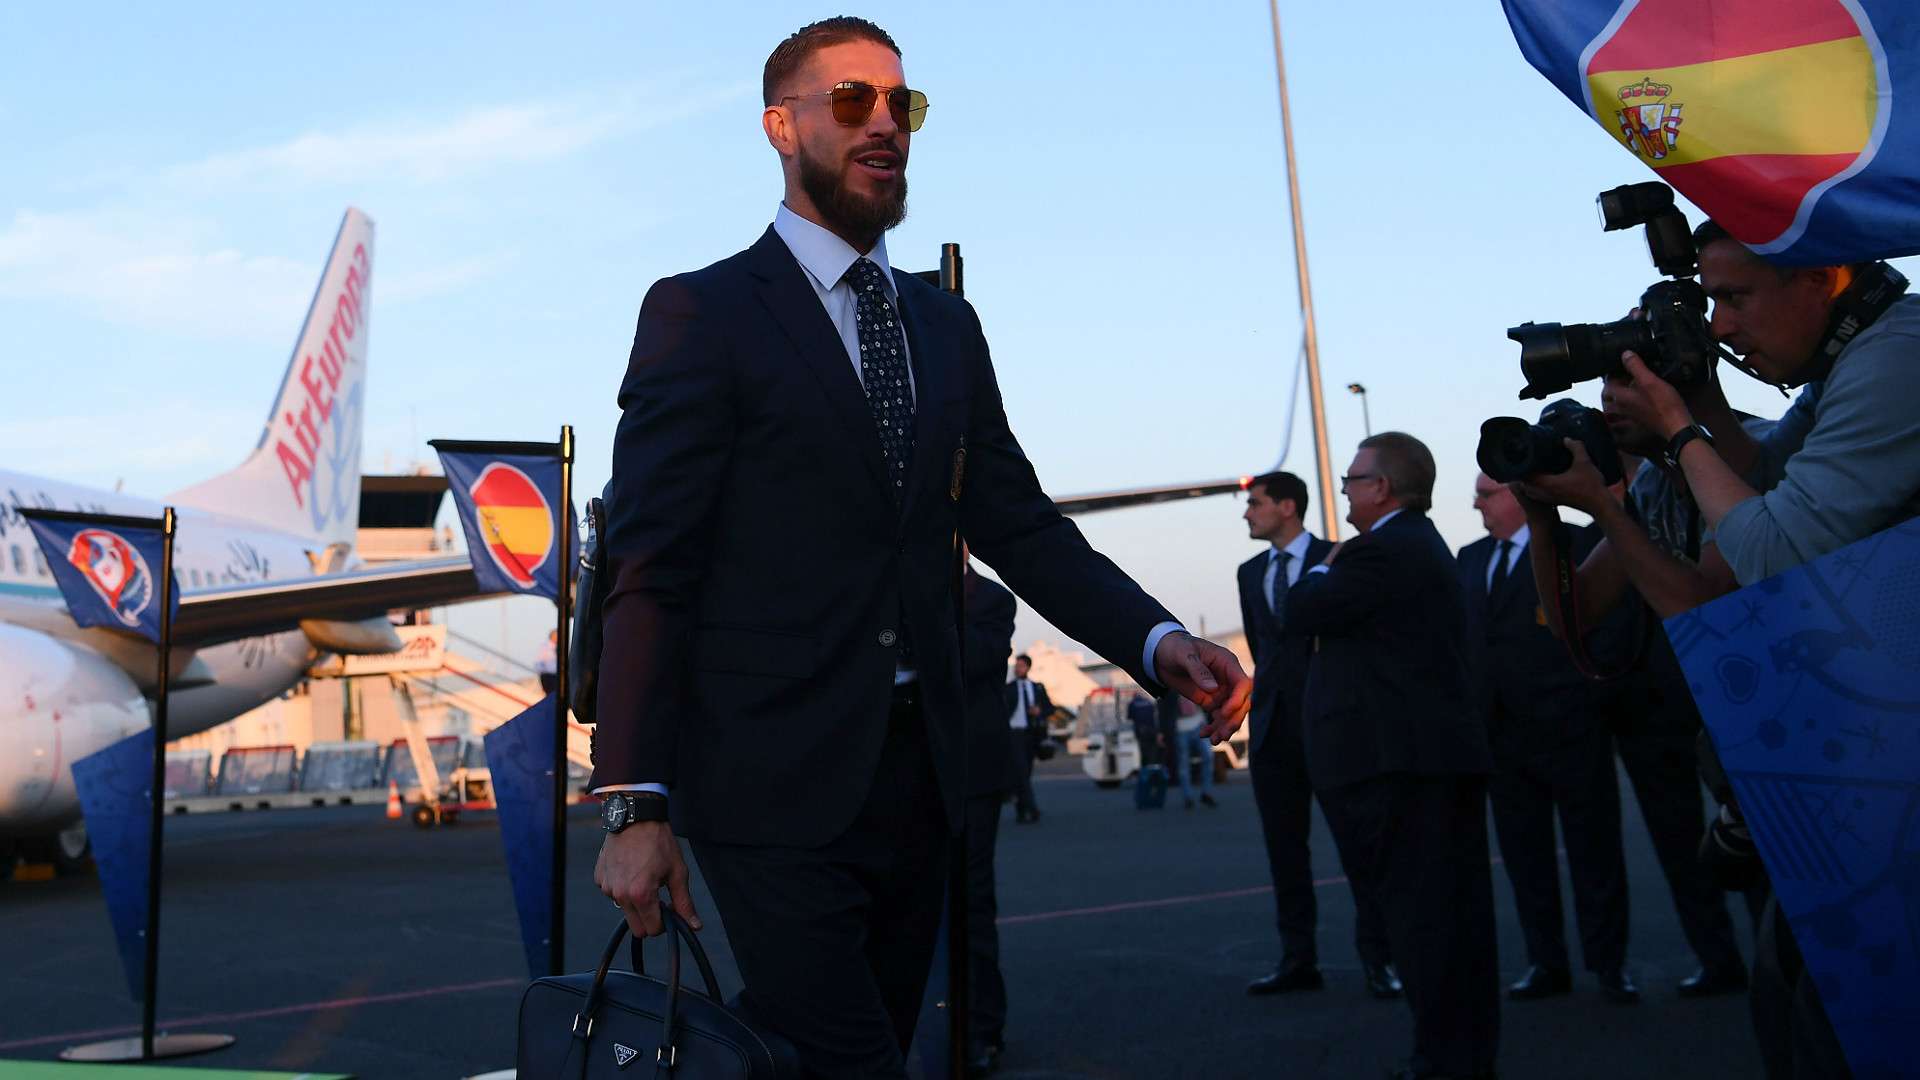 Serio Ramos Spain EURO 2016 Arrival